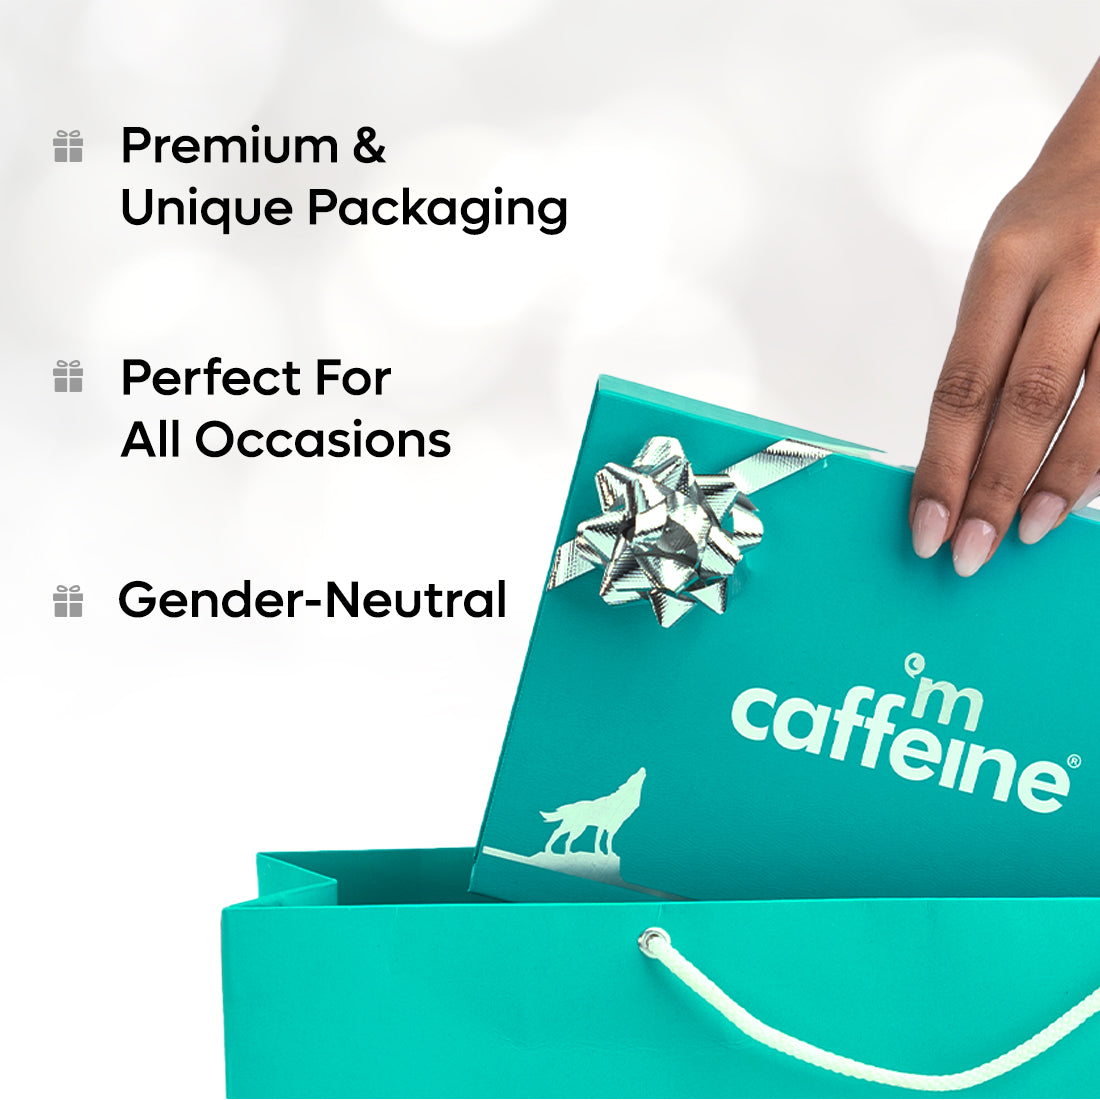 mCaffeine Coffee Shower Temptations Gift Kit